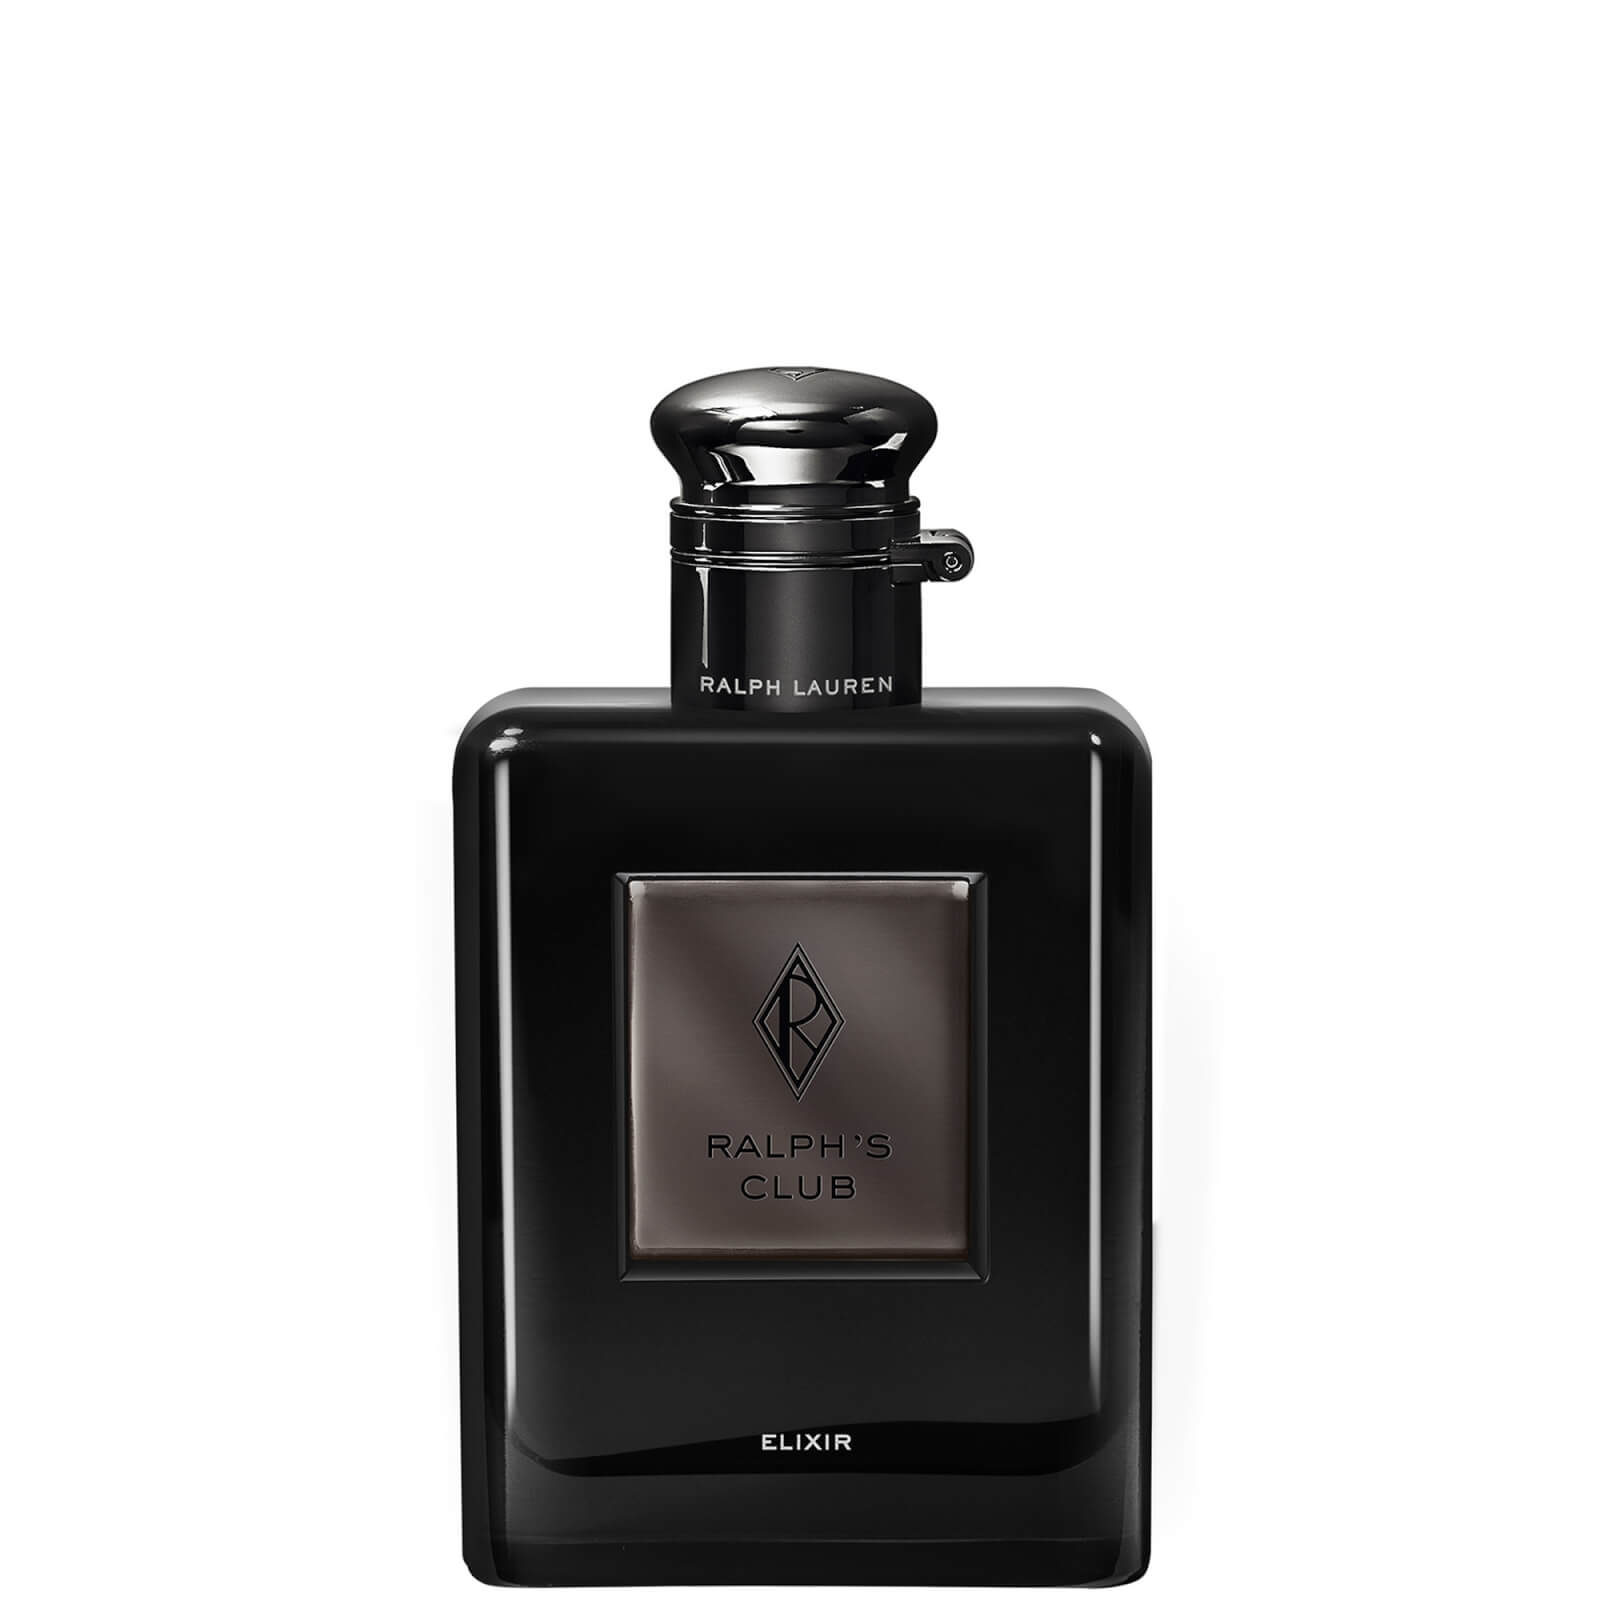 Image of Ralph Lauren Ralph's Club Elixir Eau de Parfum 75ml